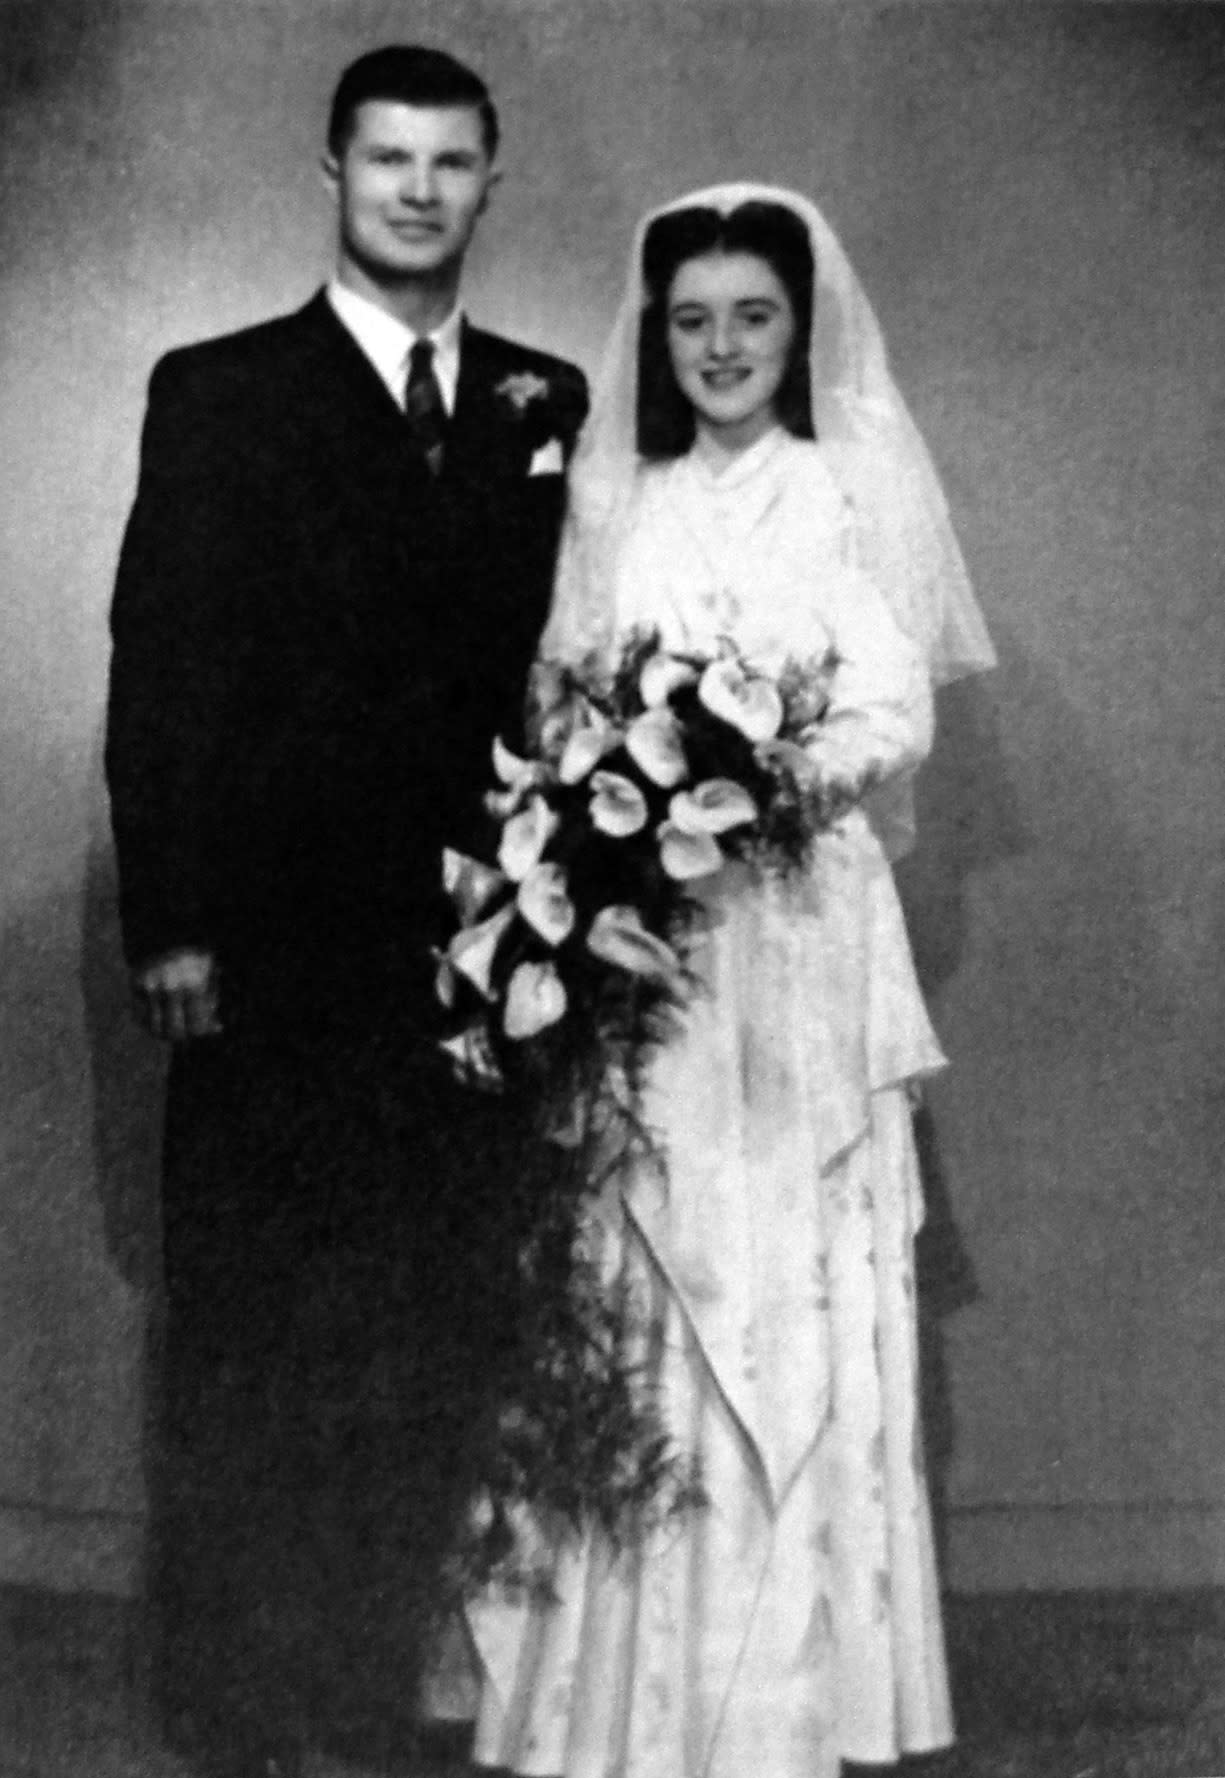 Betty Grebenschikoff's wedding picture. (Shanghai Jewish Refugees Museum)